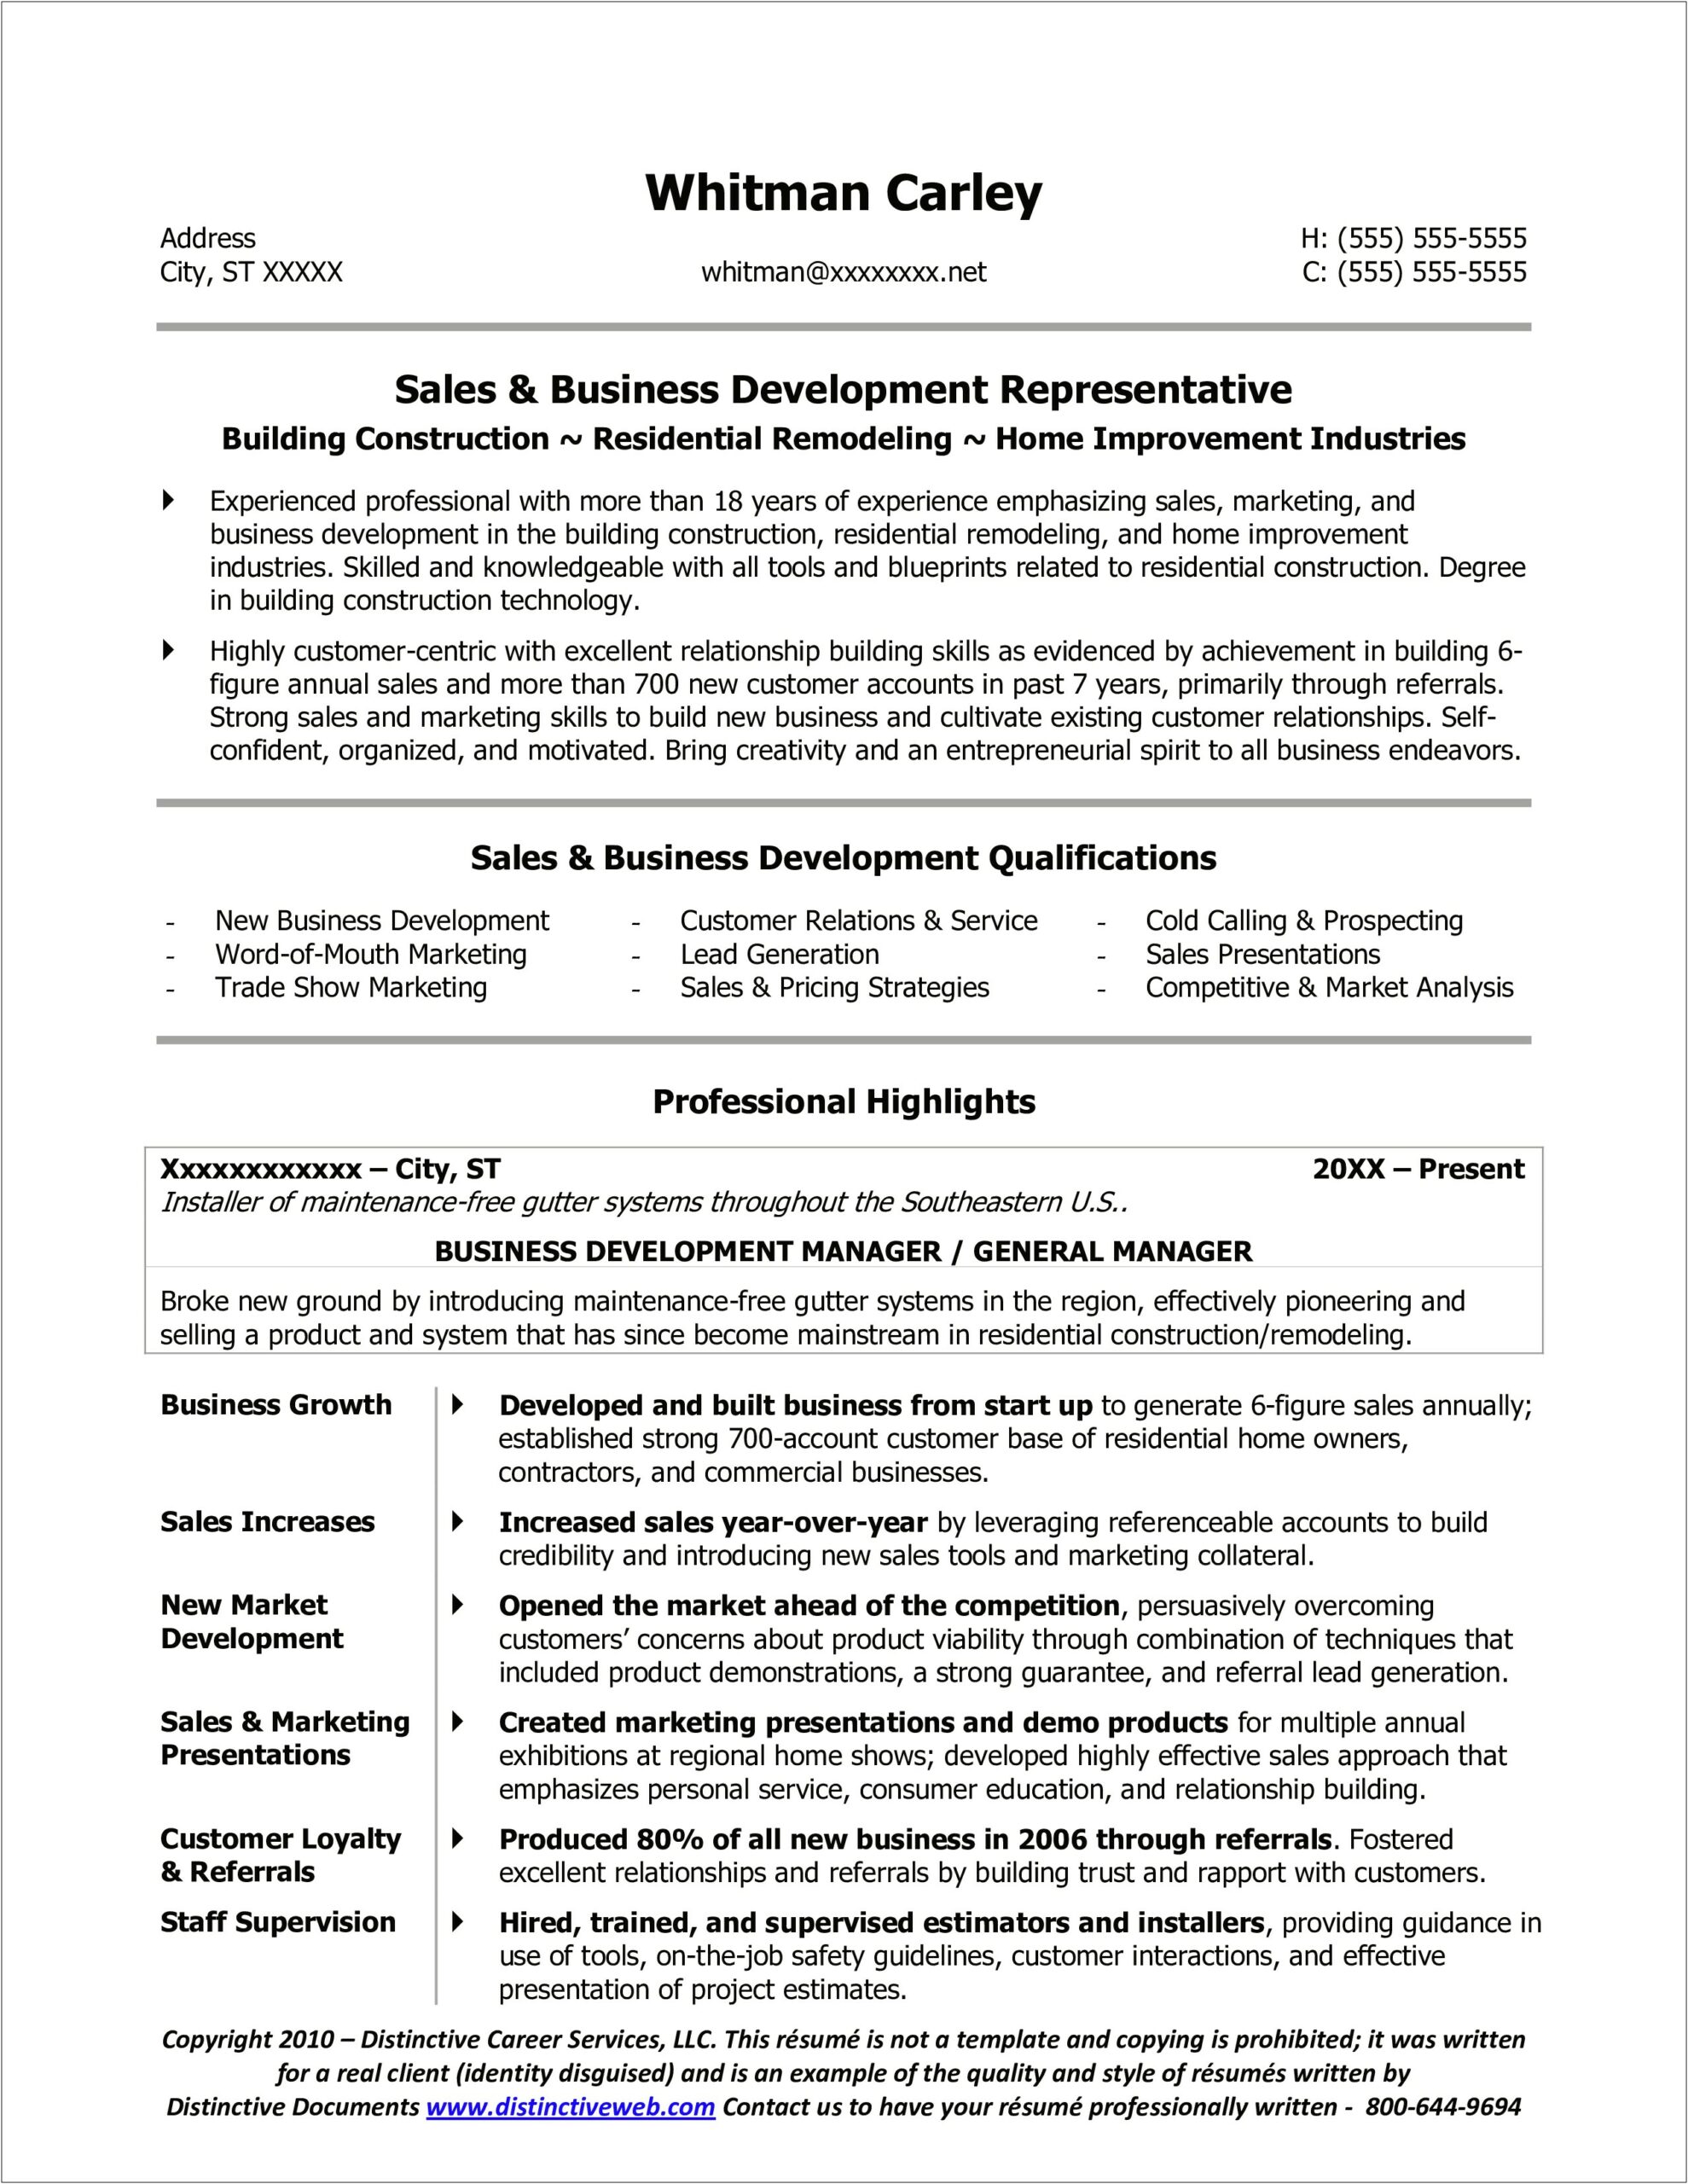 Business Development Representative Resume Objective